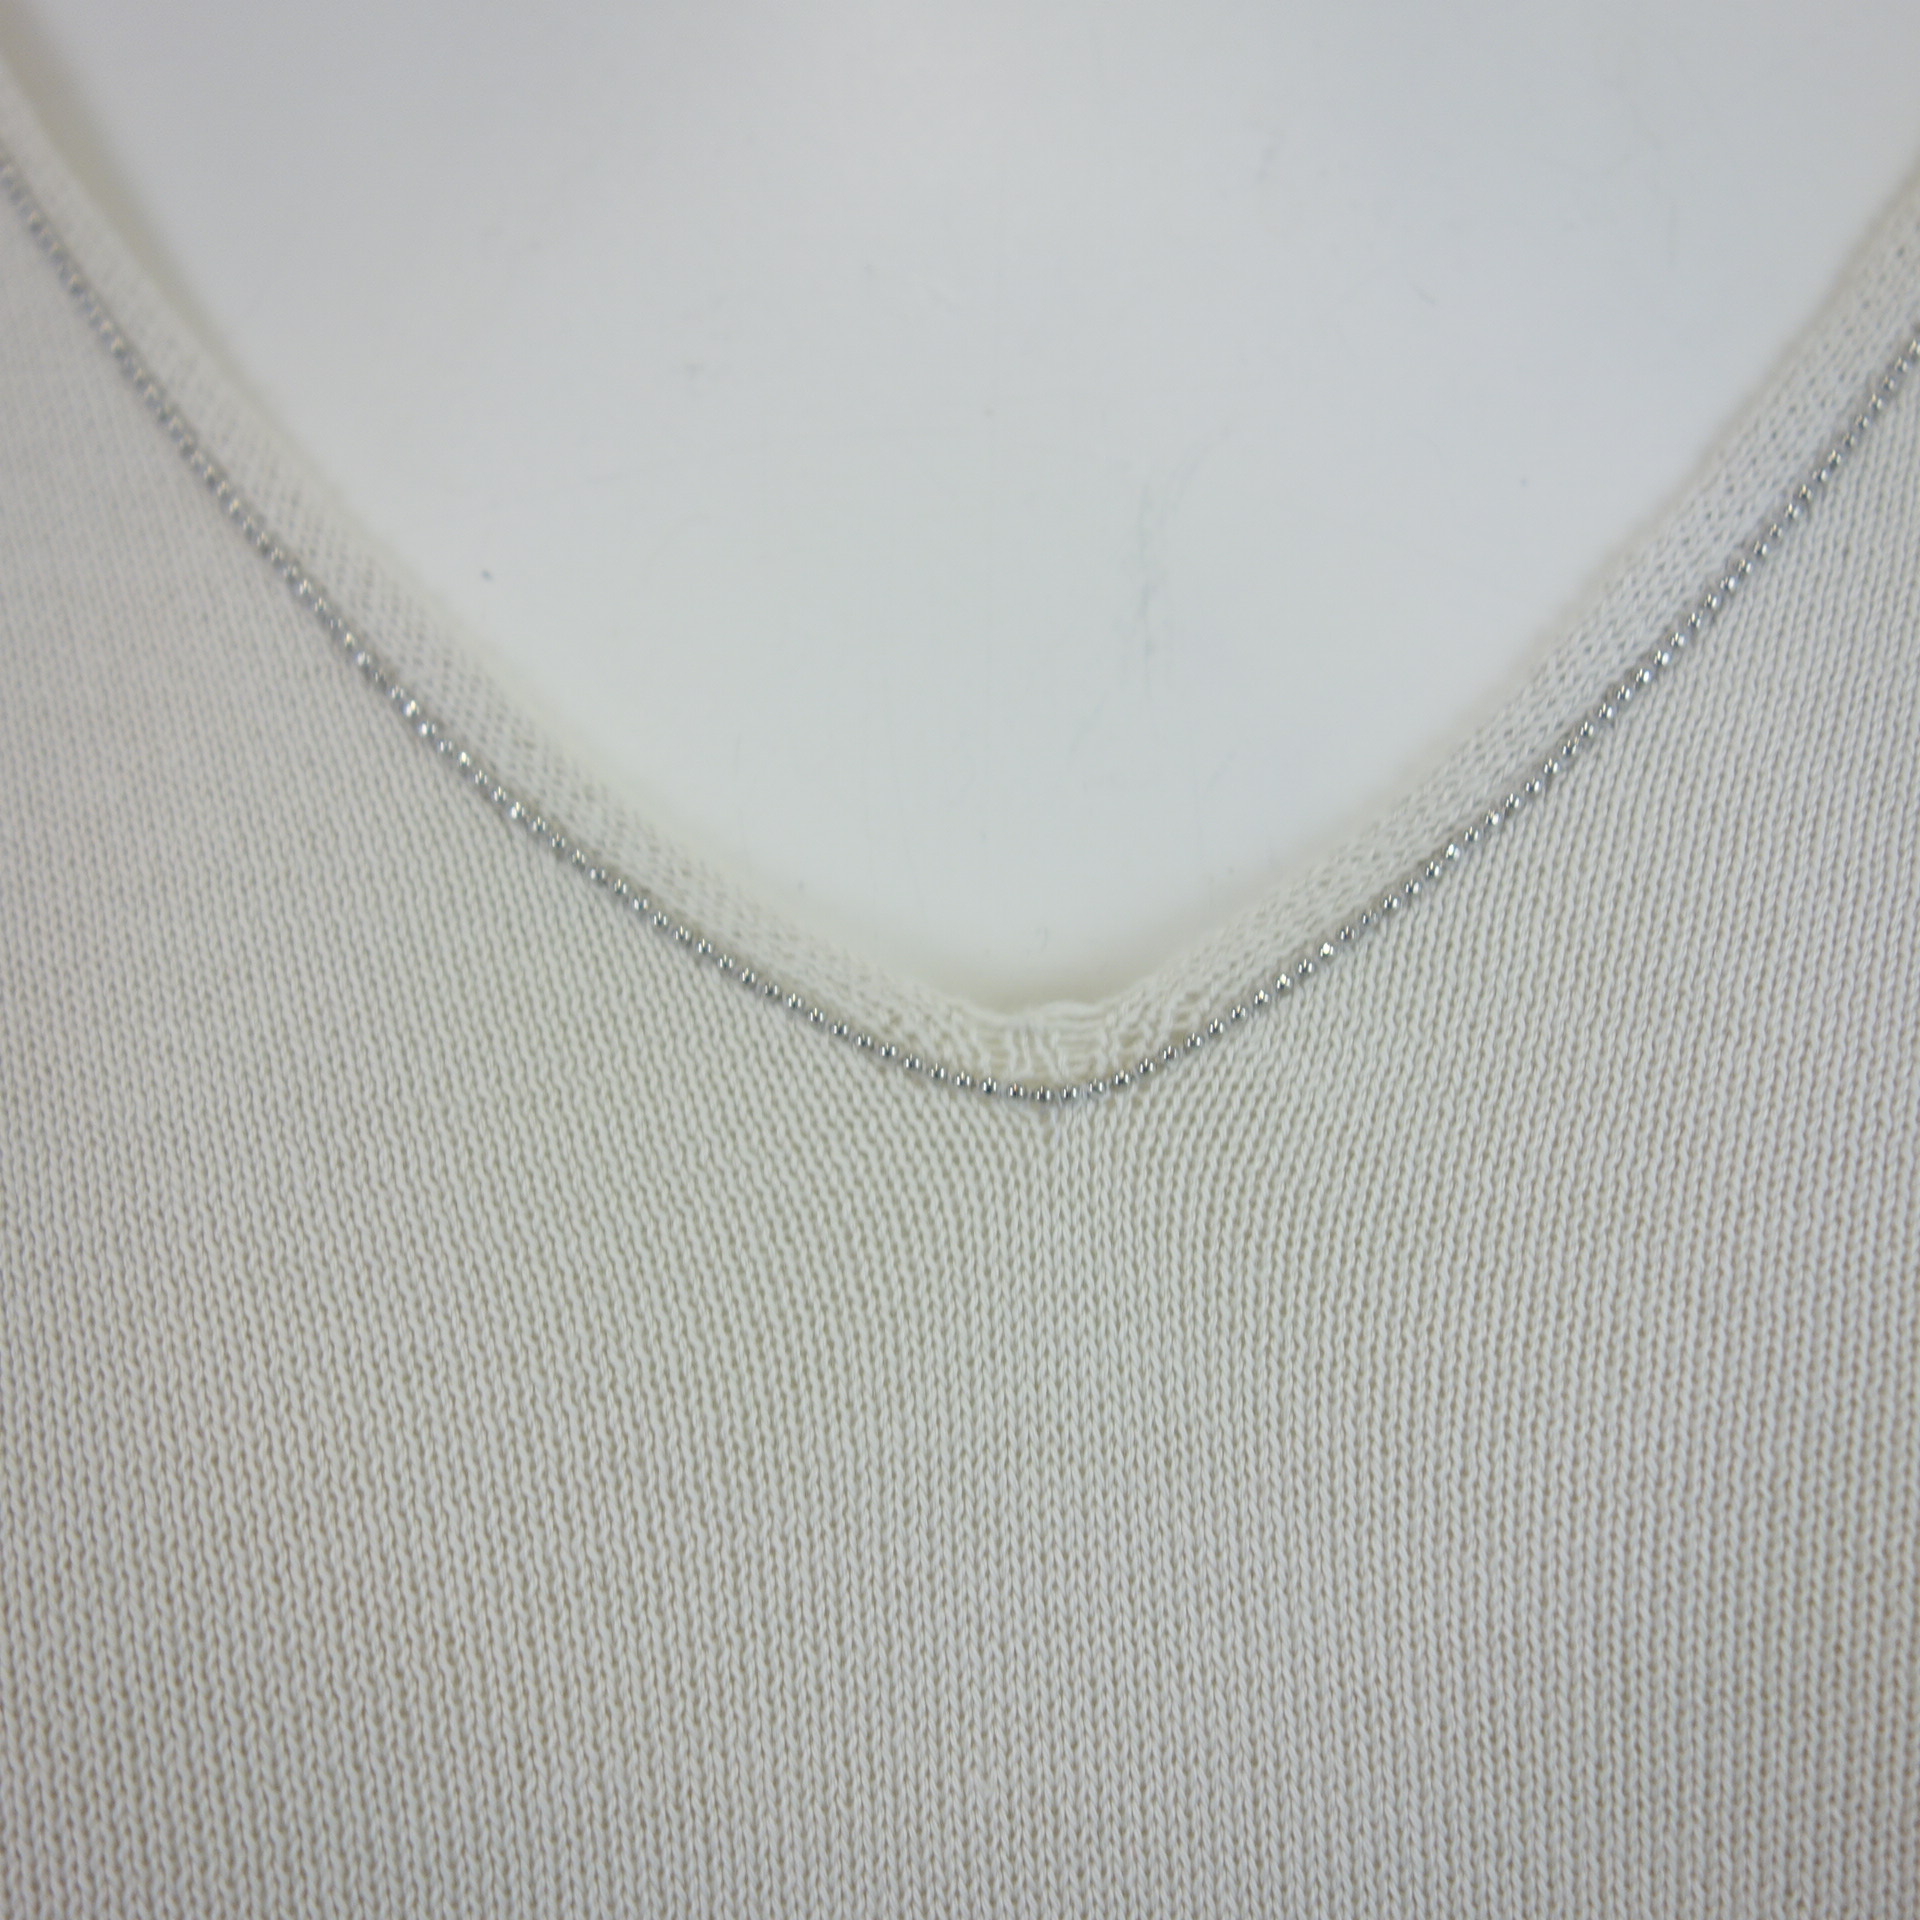 FABIANA FILIPPI Damen 2 in 1 Pullover Mesh Bluse Beige Weiß Baumwolle Viskose IT 44 DE 38